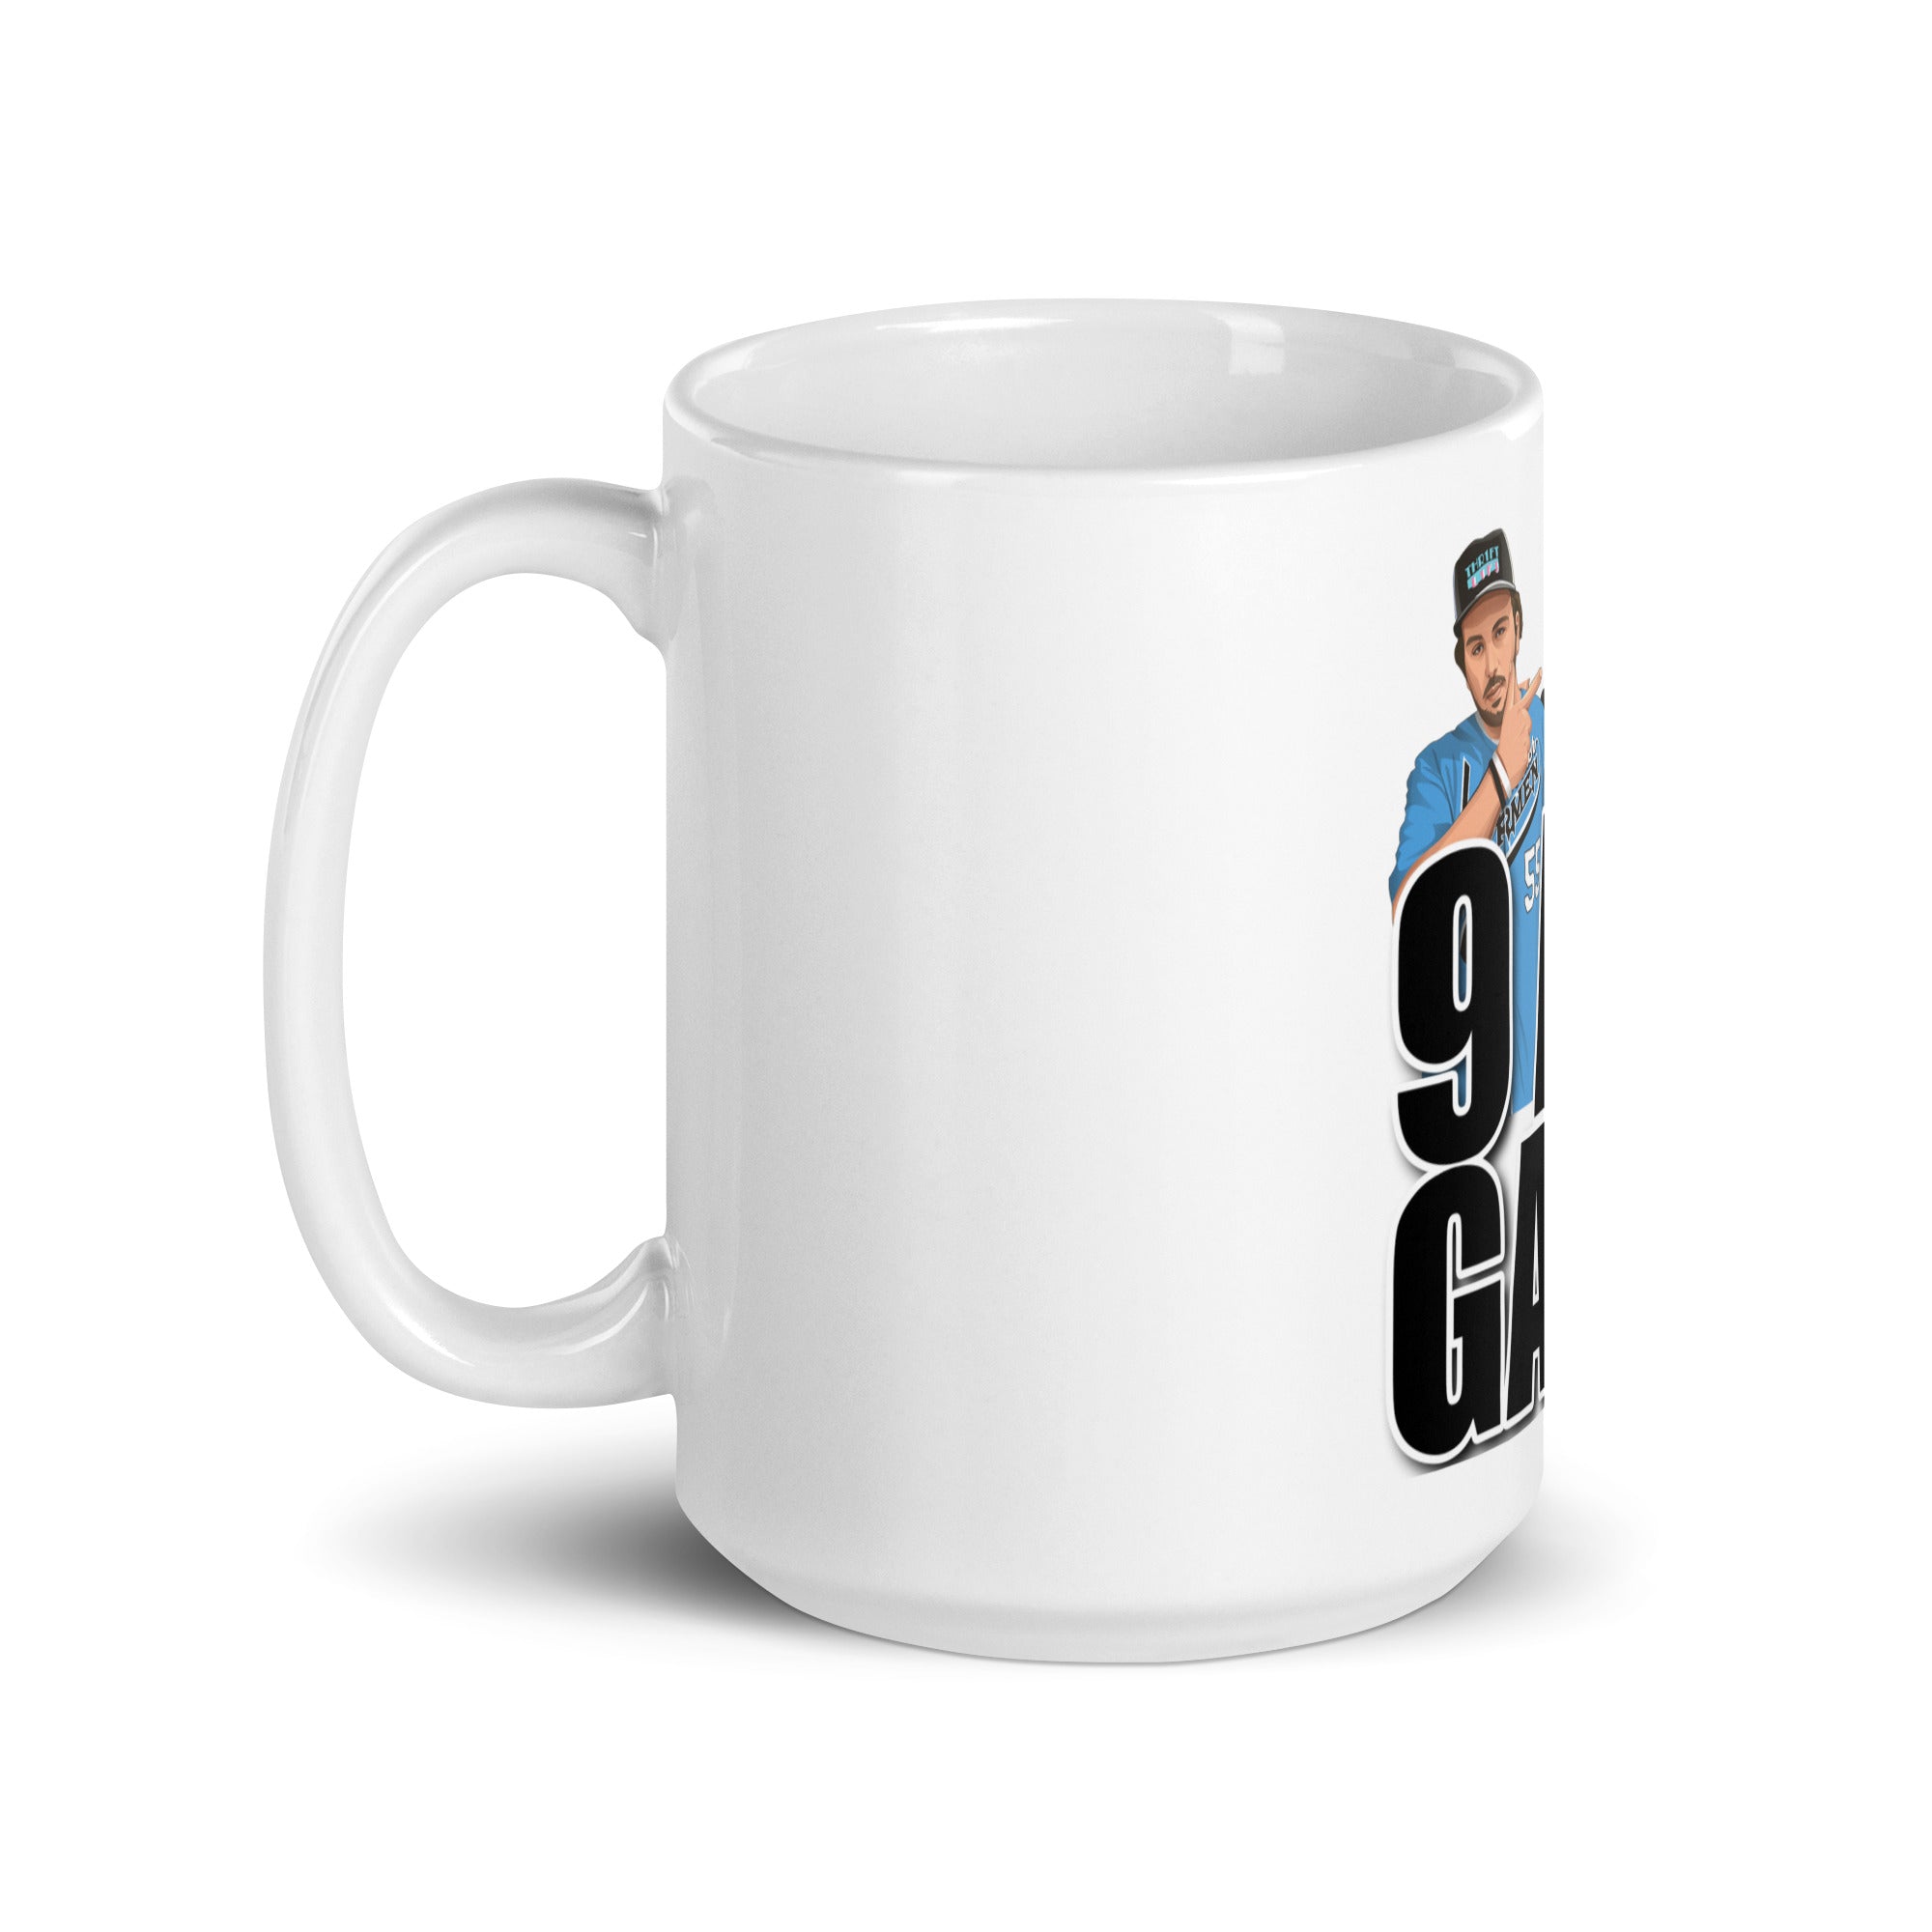 9AM Gang White glossy mug